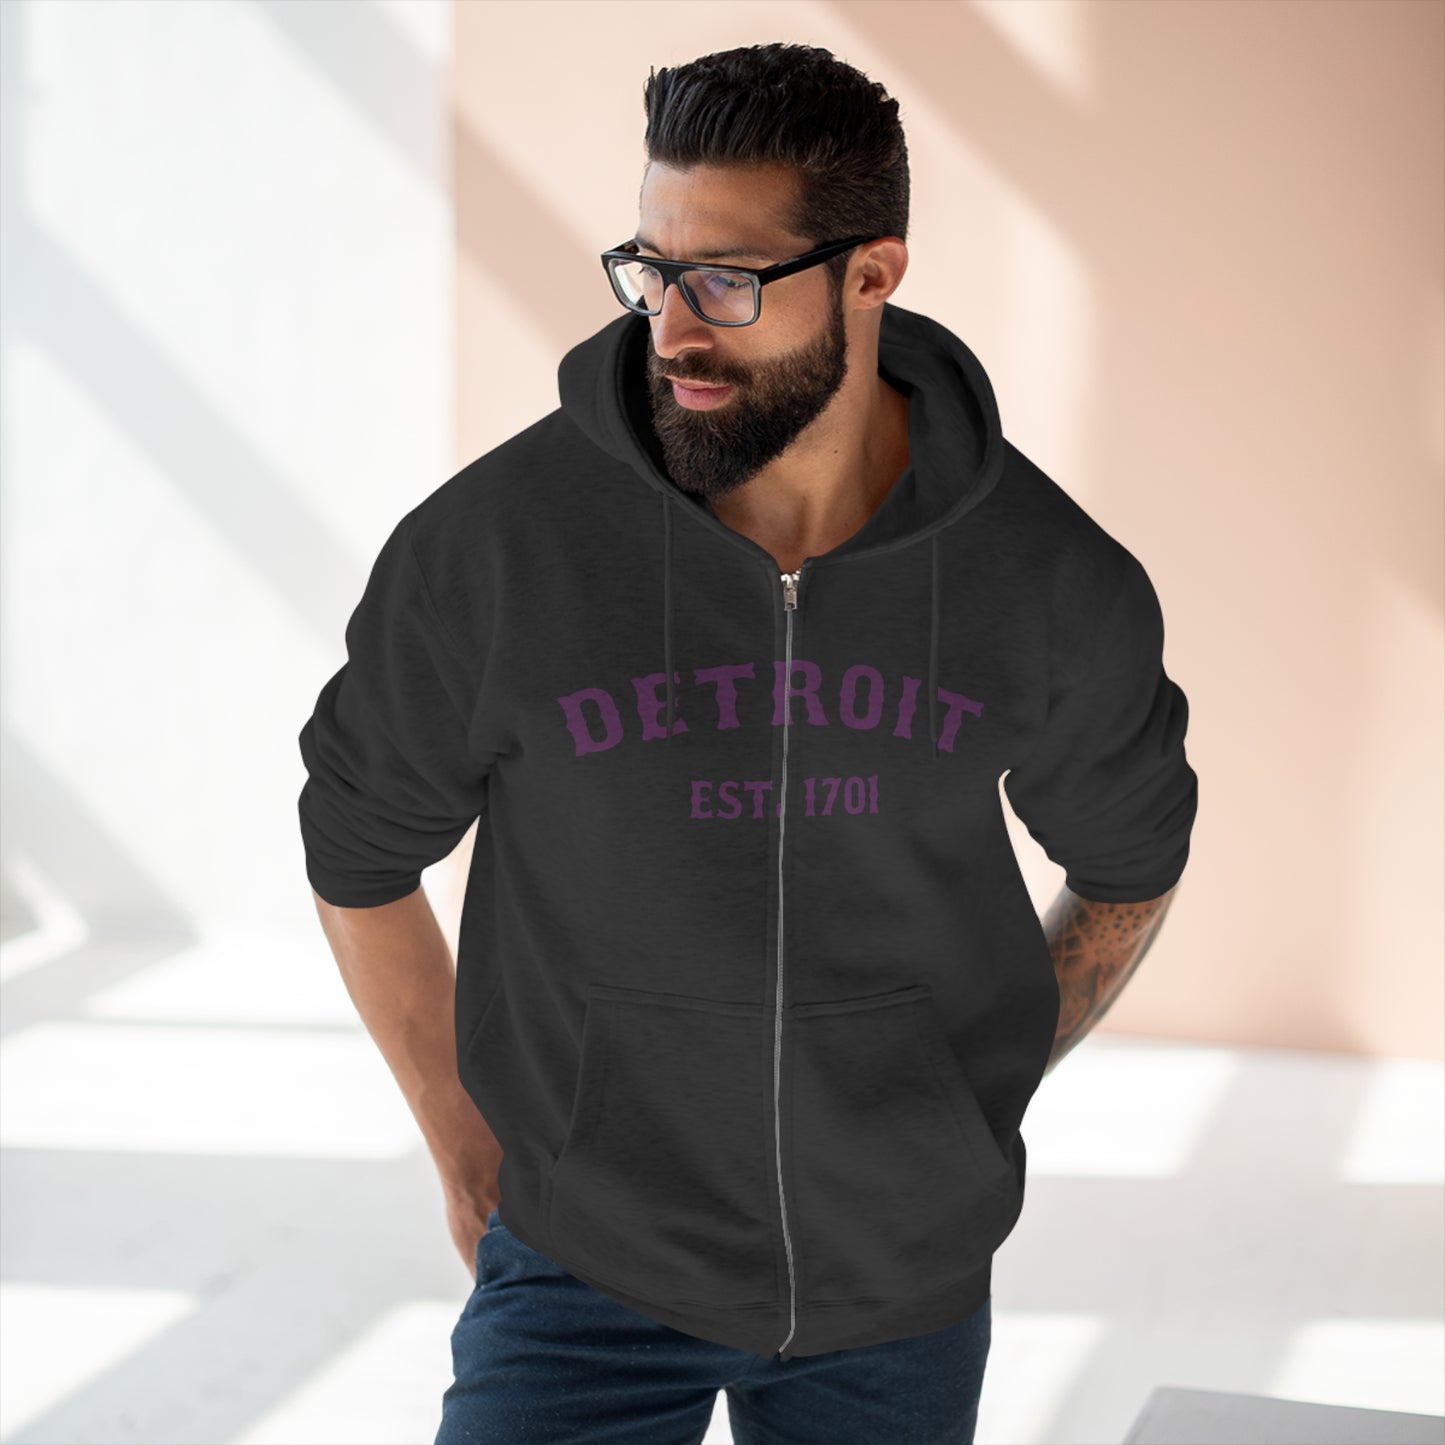 'Detroit EST. 1701' Hoodie (Plum Ballpark Font) | Unisex Full Zip